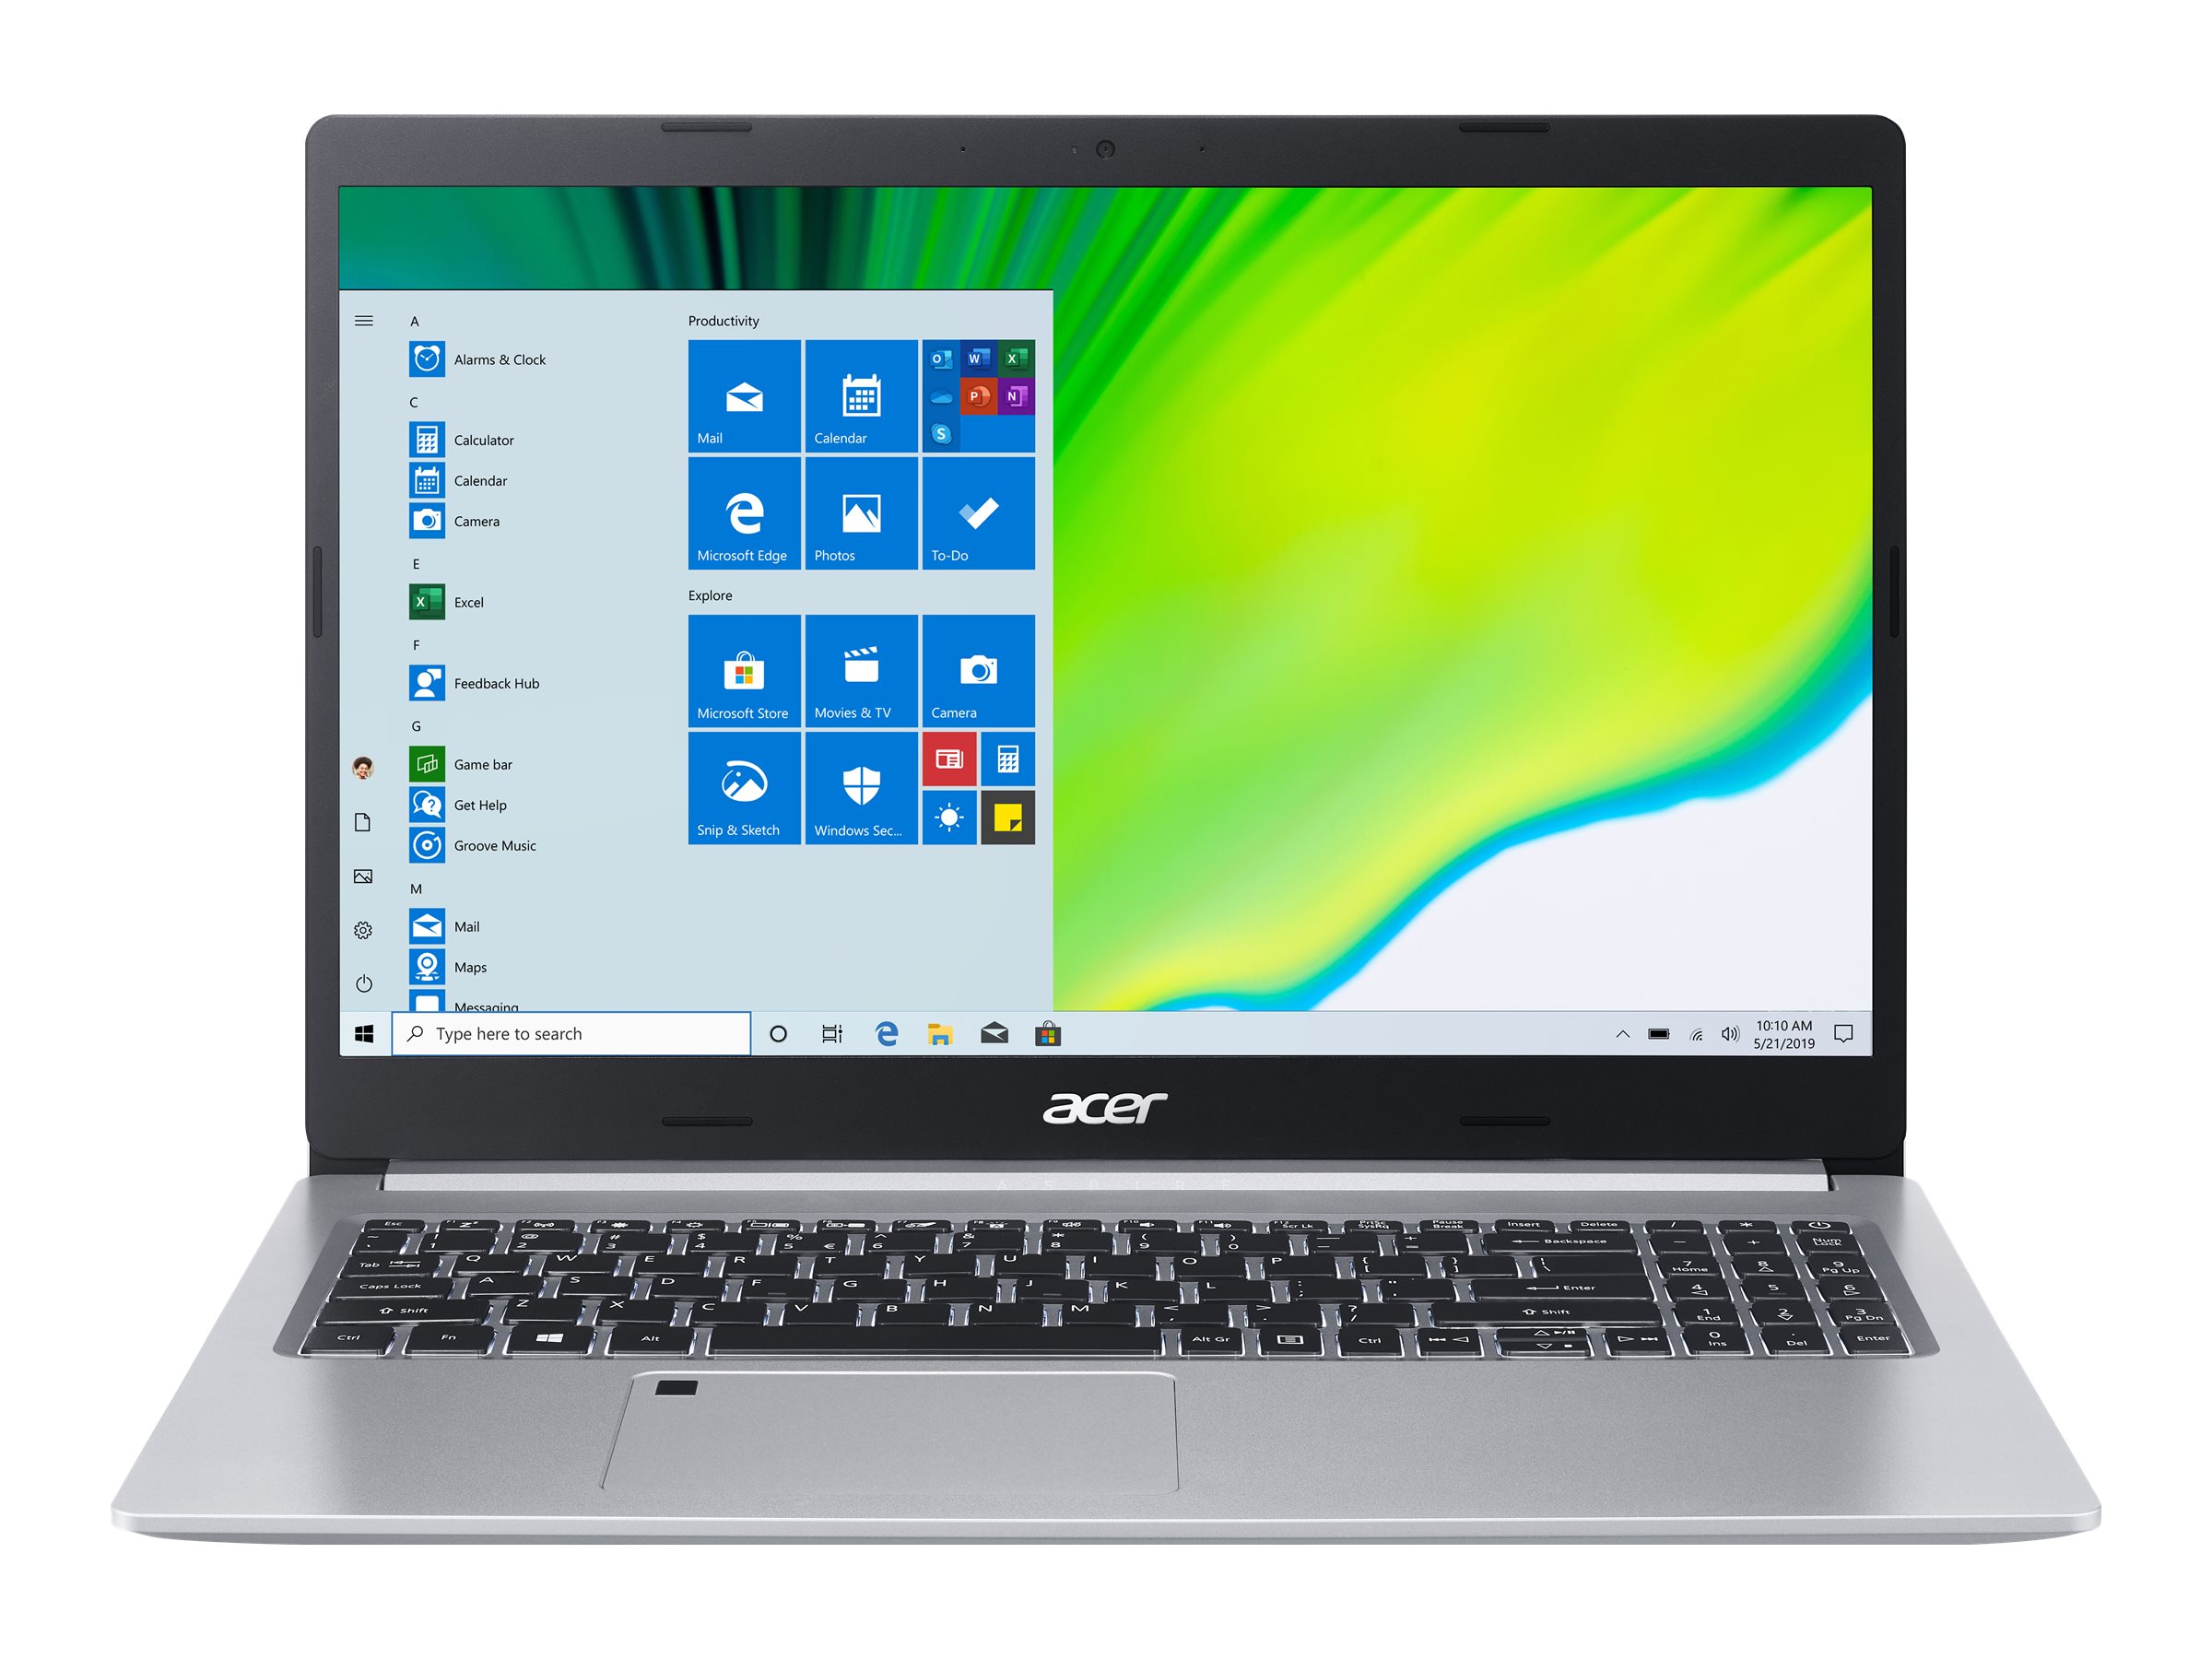 Acer Aspire 5 A515-44-R41B - Ryzen 5 4500U / 2.3 GHz - Win 10 Home 64-bit - 8 GB RAM - 256 GB SSD - 15.6" IPS 1920 x 1080 (Full HD) - Radeon HD - Wi-Fi, Bluetooth - pure silver - kbd: US International - image 1 of 8